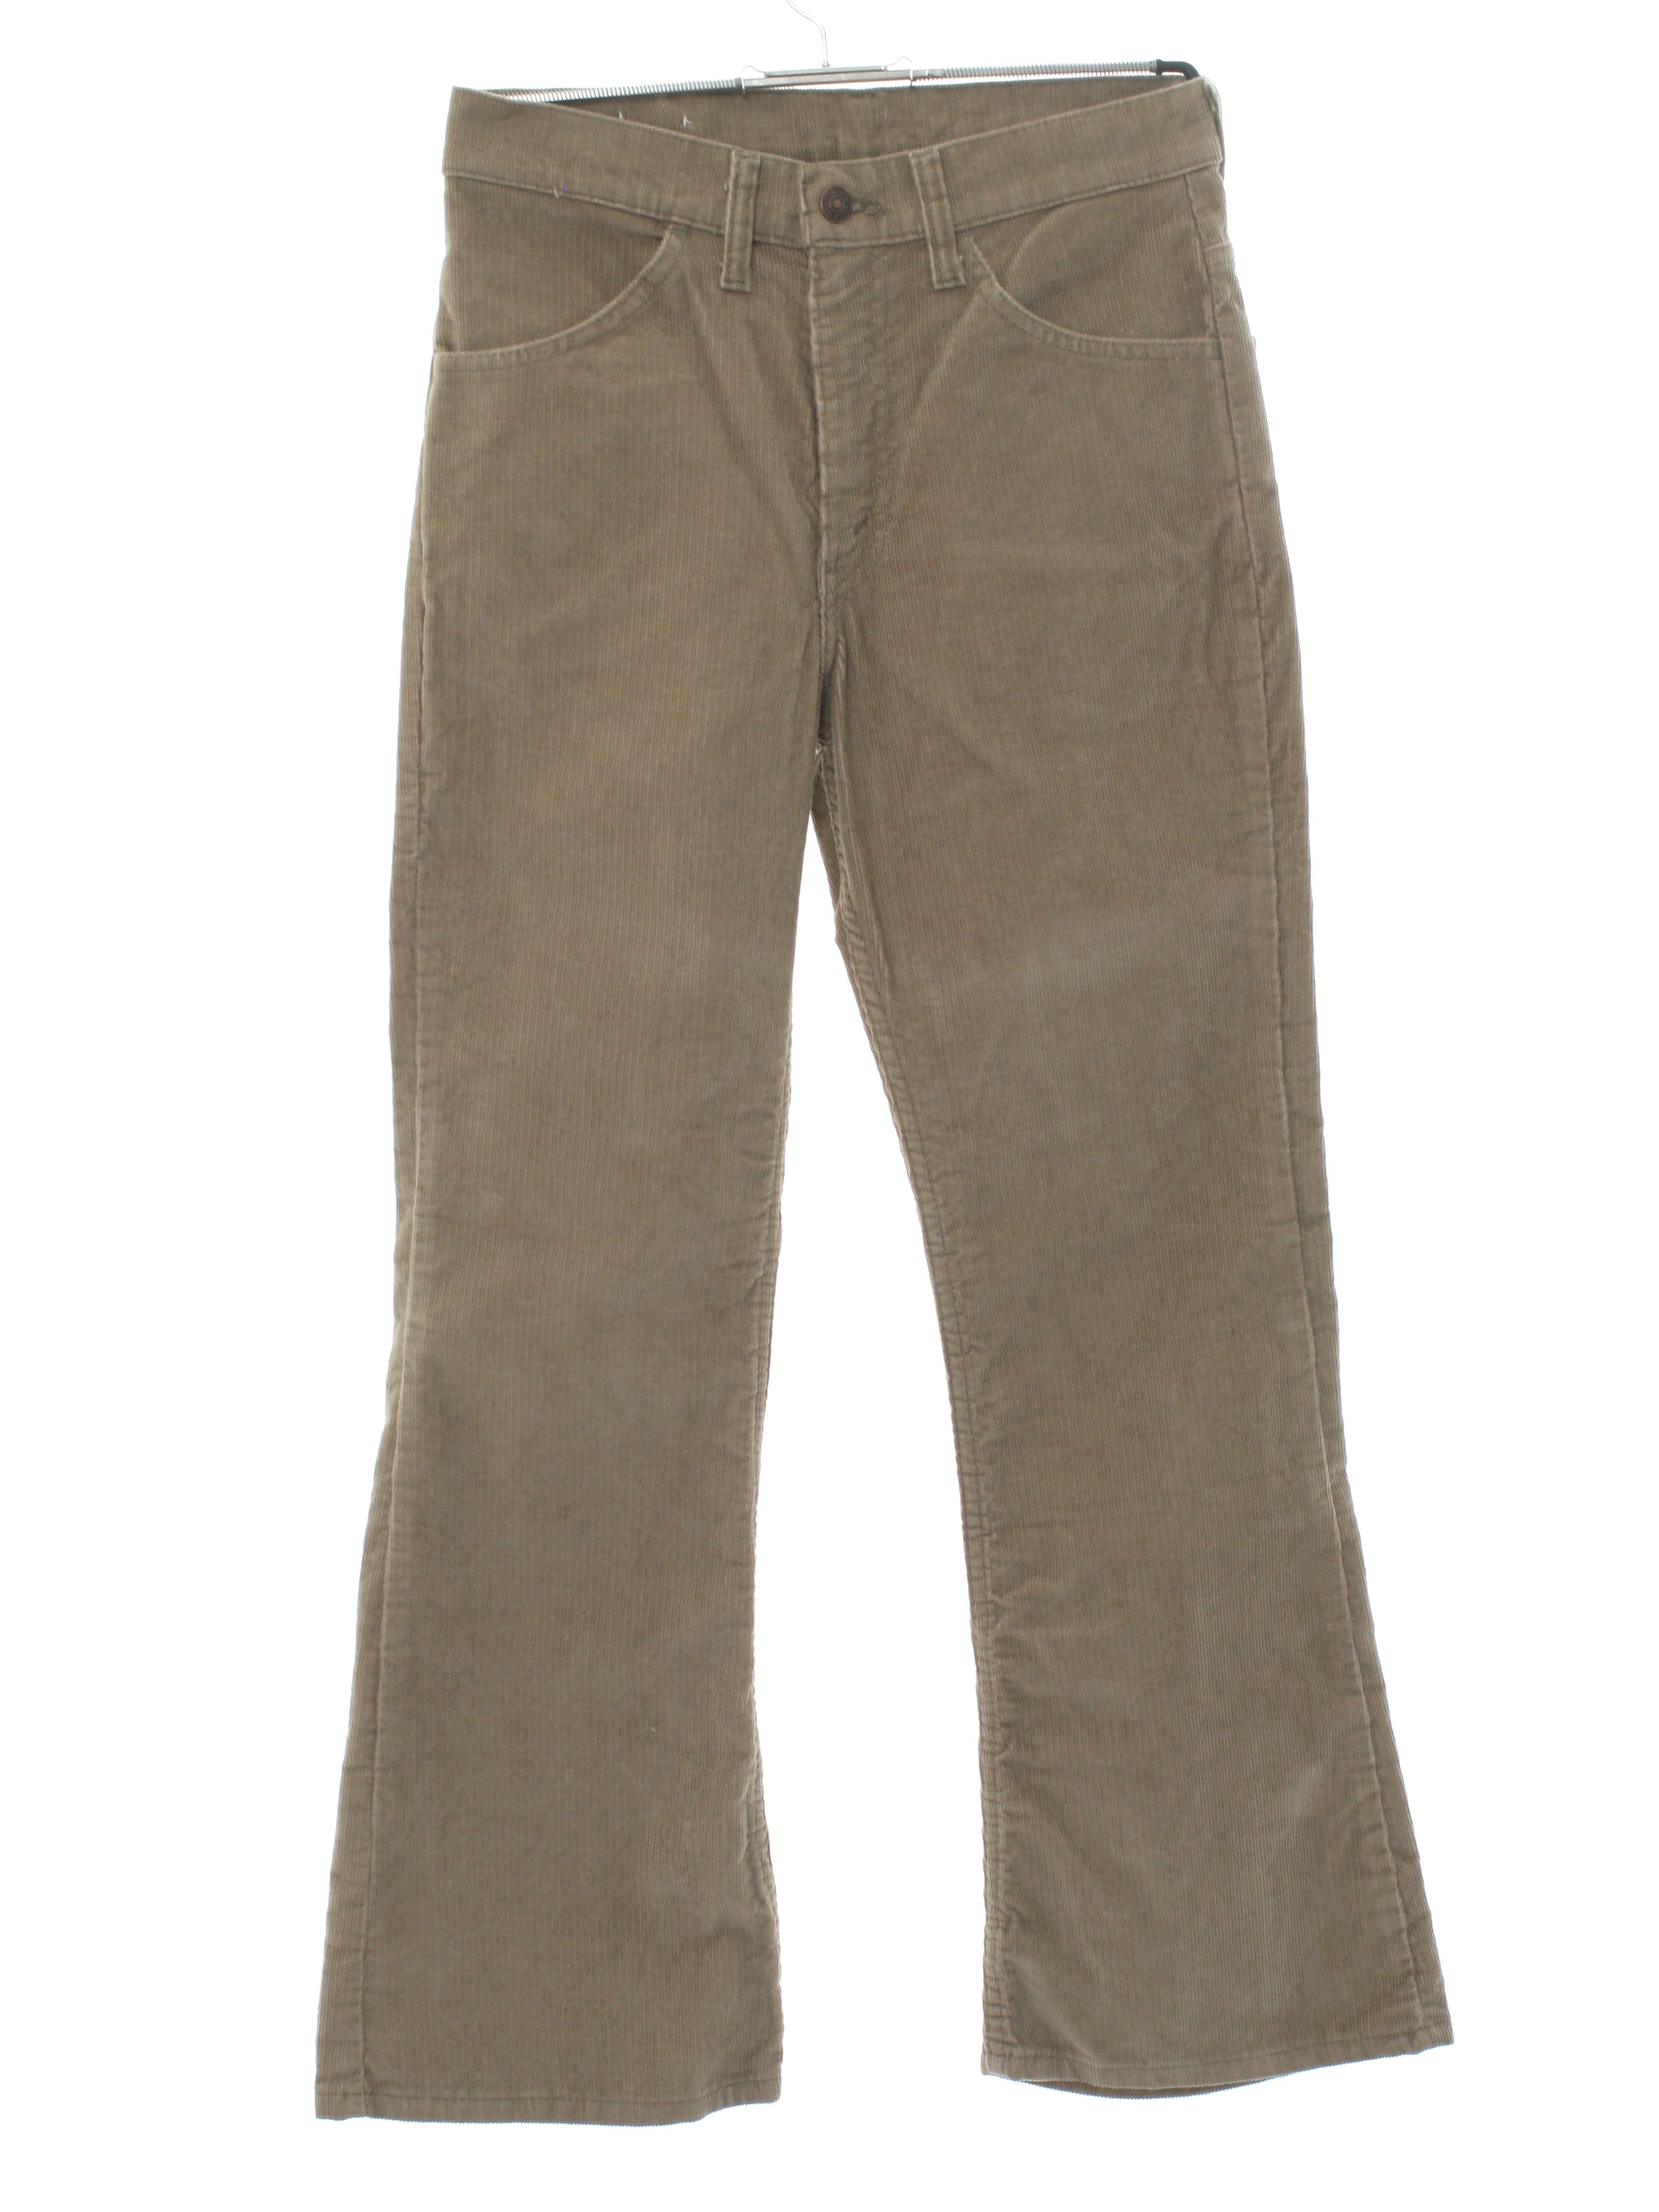 Vintage 1970's Bellbottom Pants: 70s -Levis Durawale Plus 646